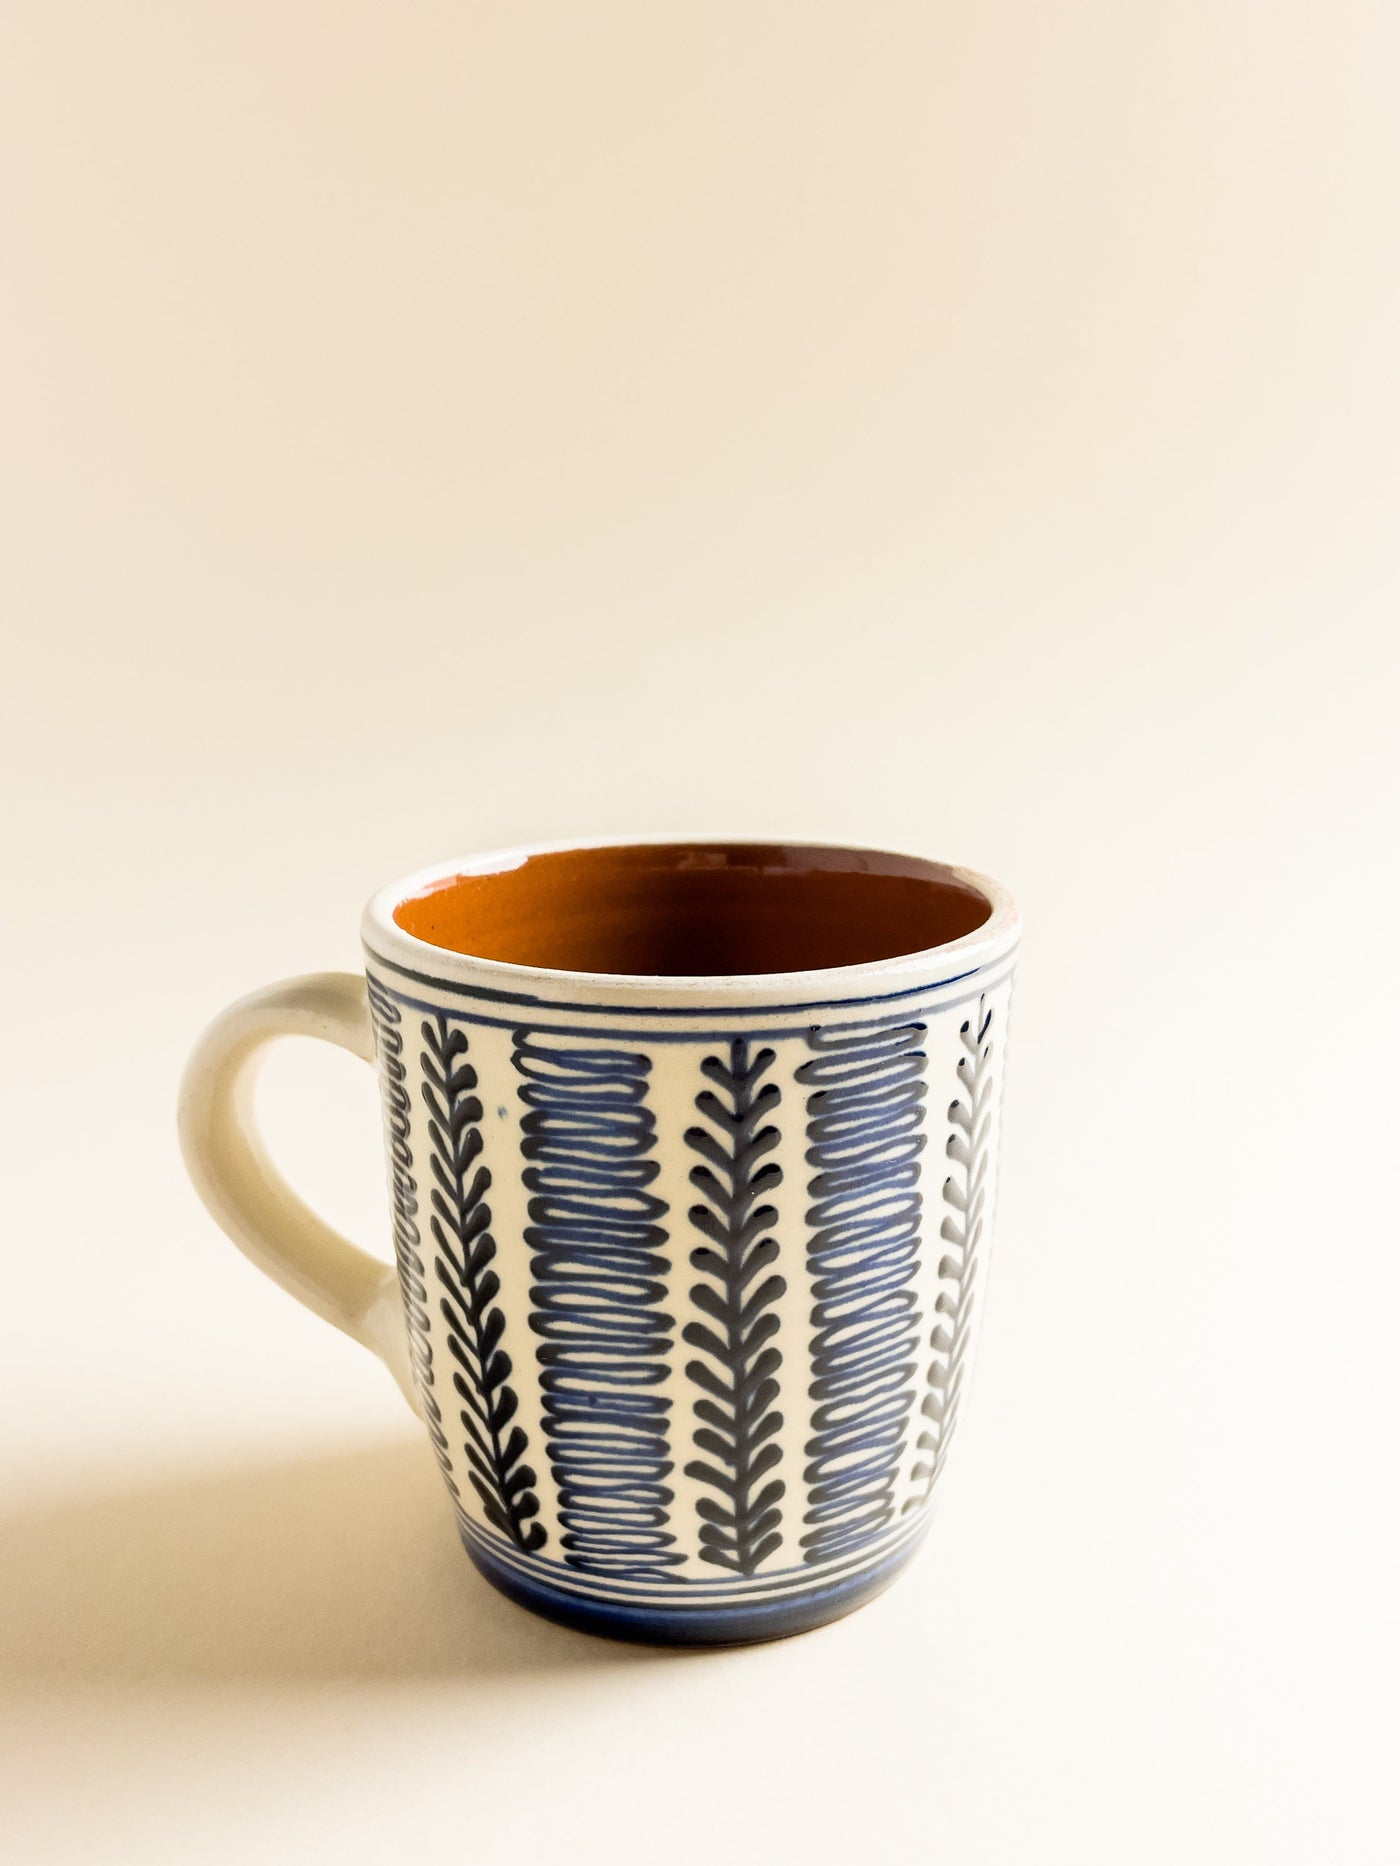 cana-medie-ceramica-corund-lucrata-manual-motiv-spice-de-grau-alb-albastru-2